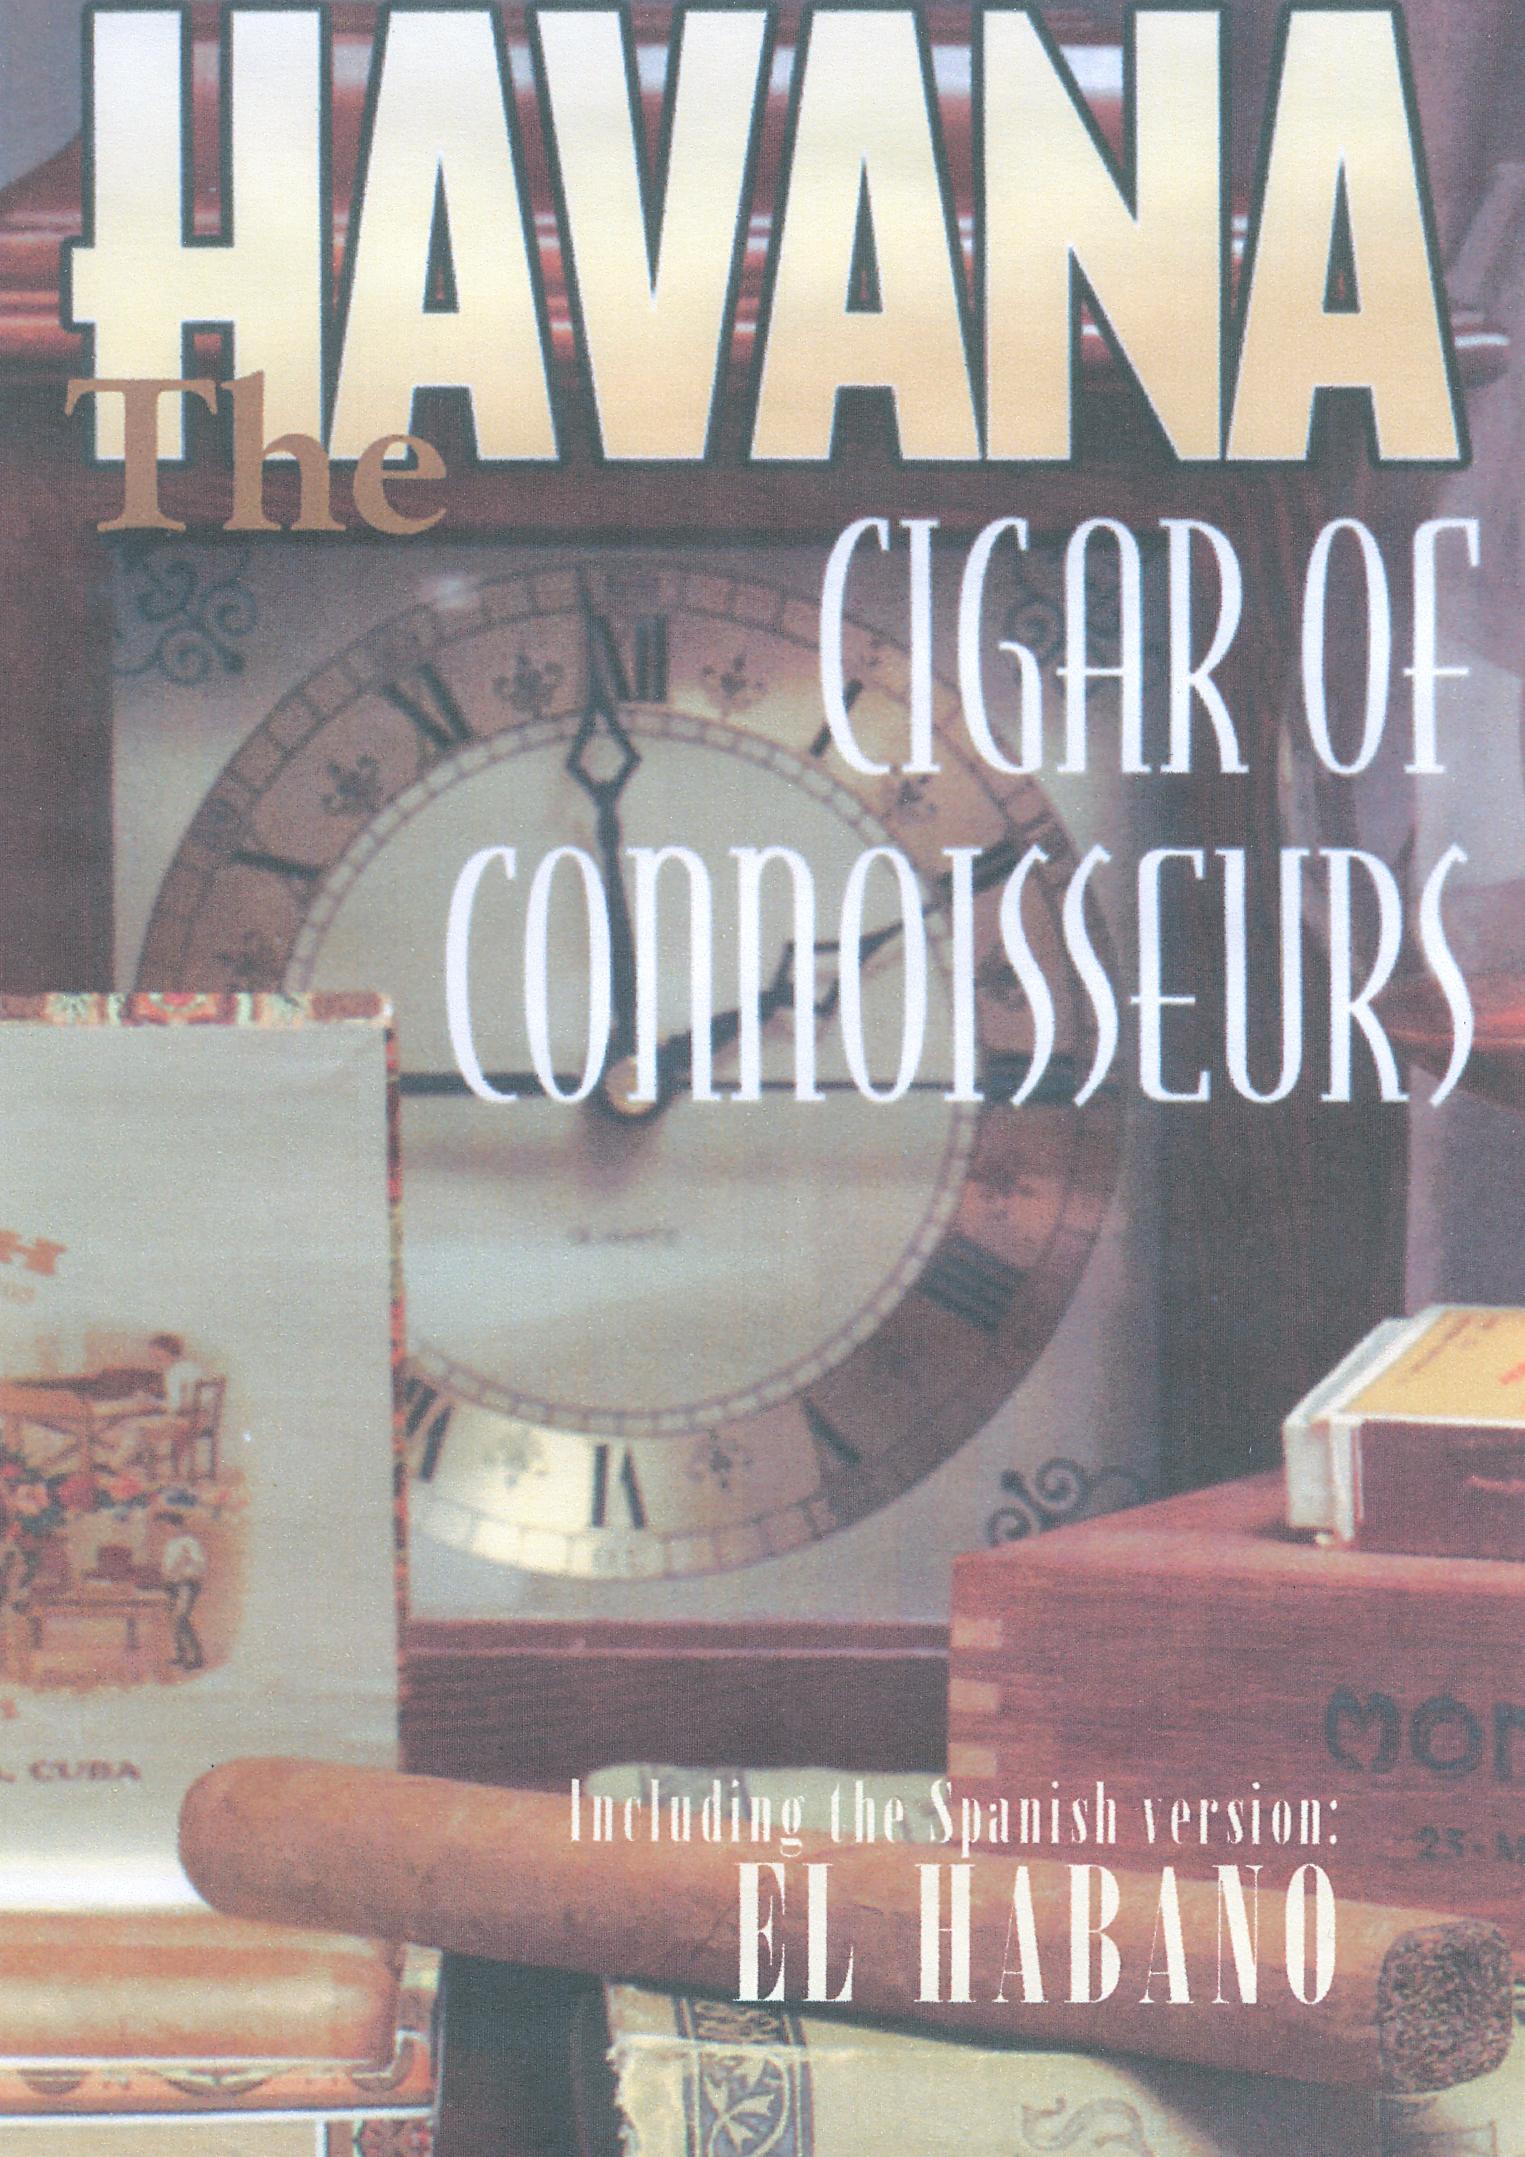 Havana: Cigar of Connoiseurs cover art